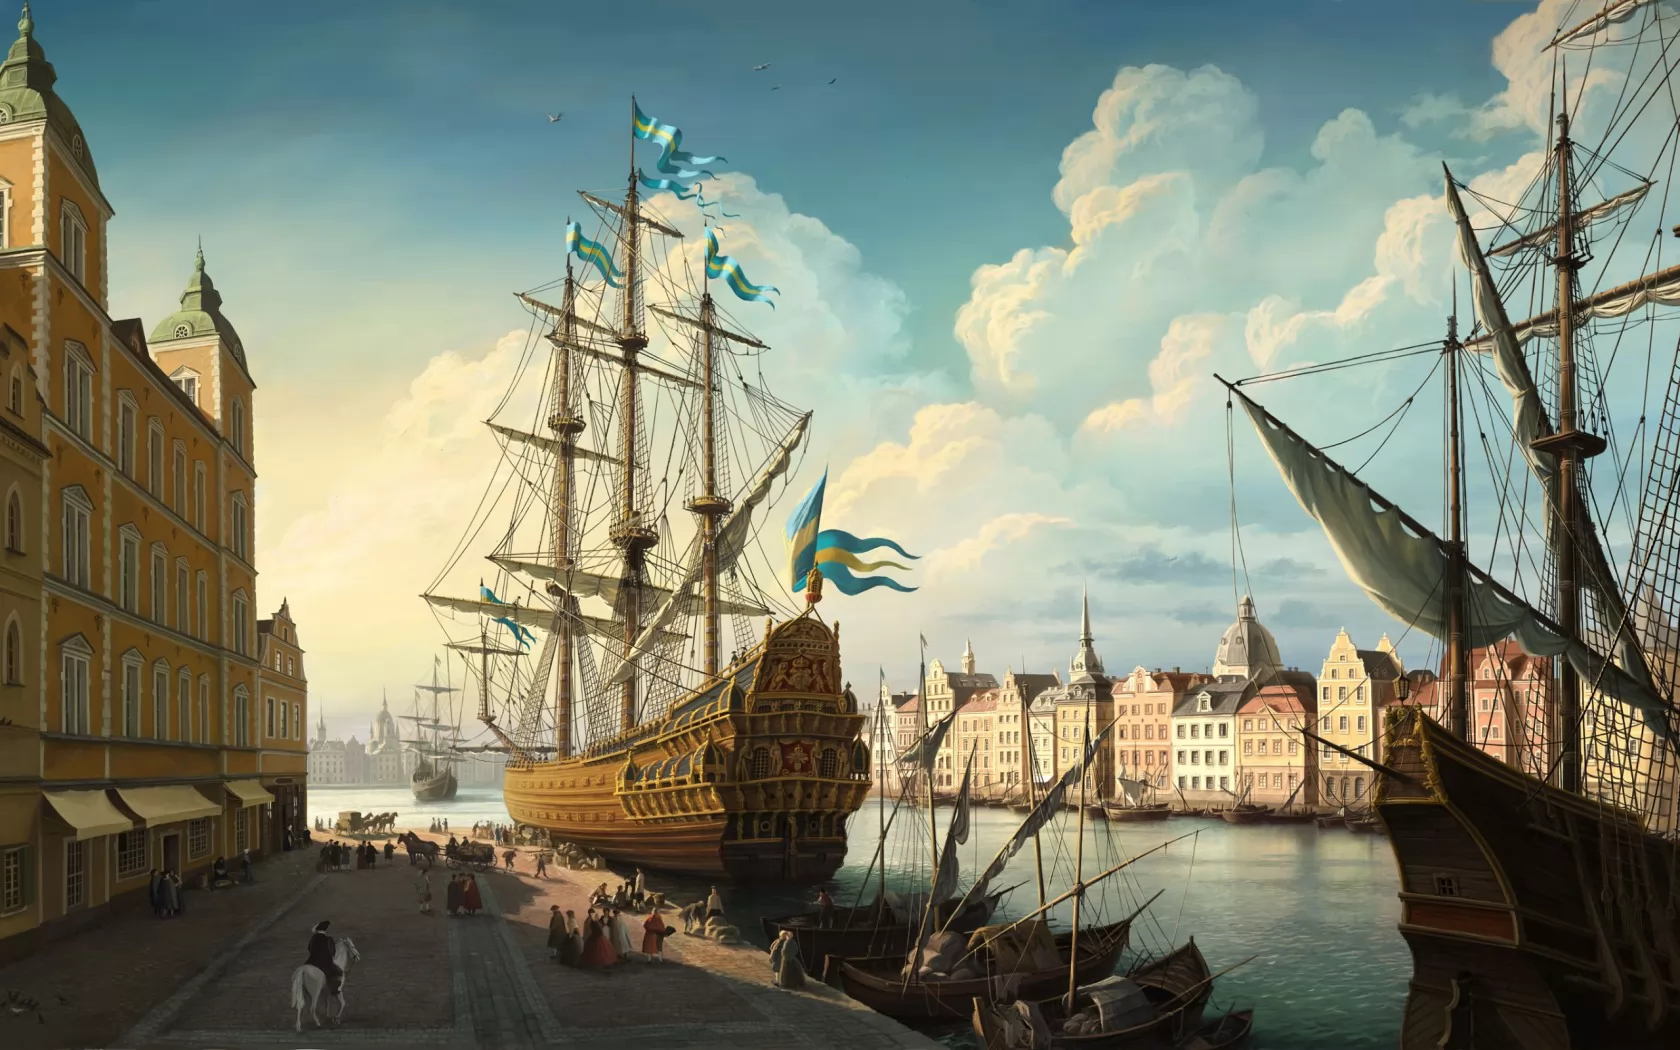 Шведский фрегат XVIII века у пристани, города и страны, Европа, лучшее, парусник, рисованное, фрегат х